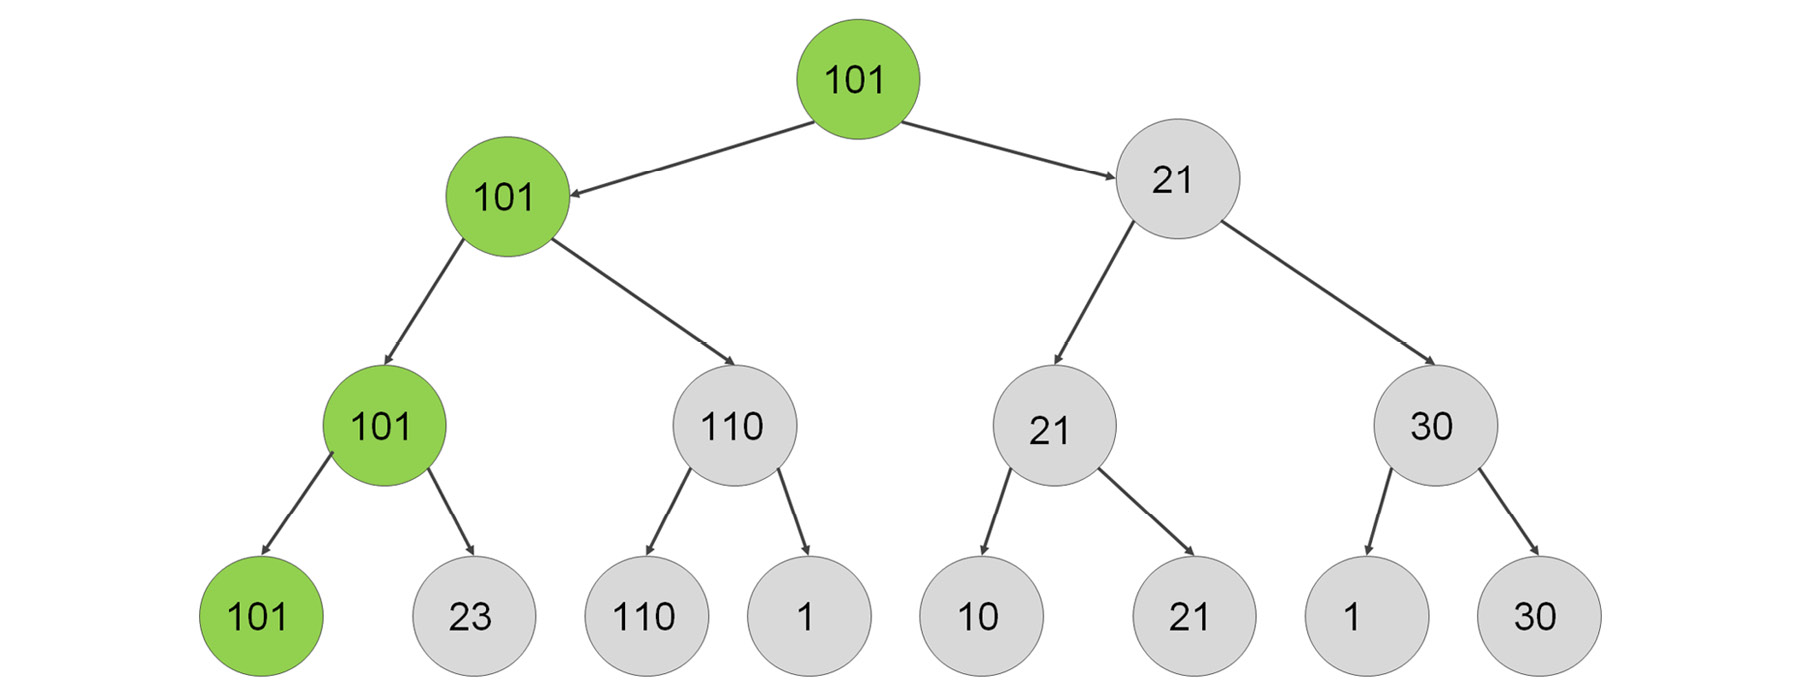 Figure 2.12 Search tree maximizing the utility